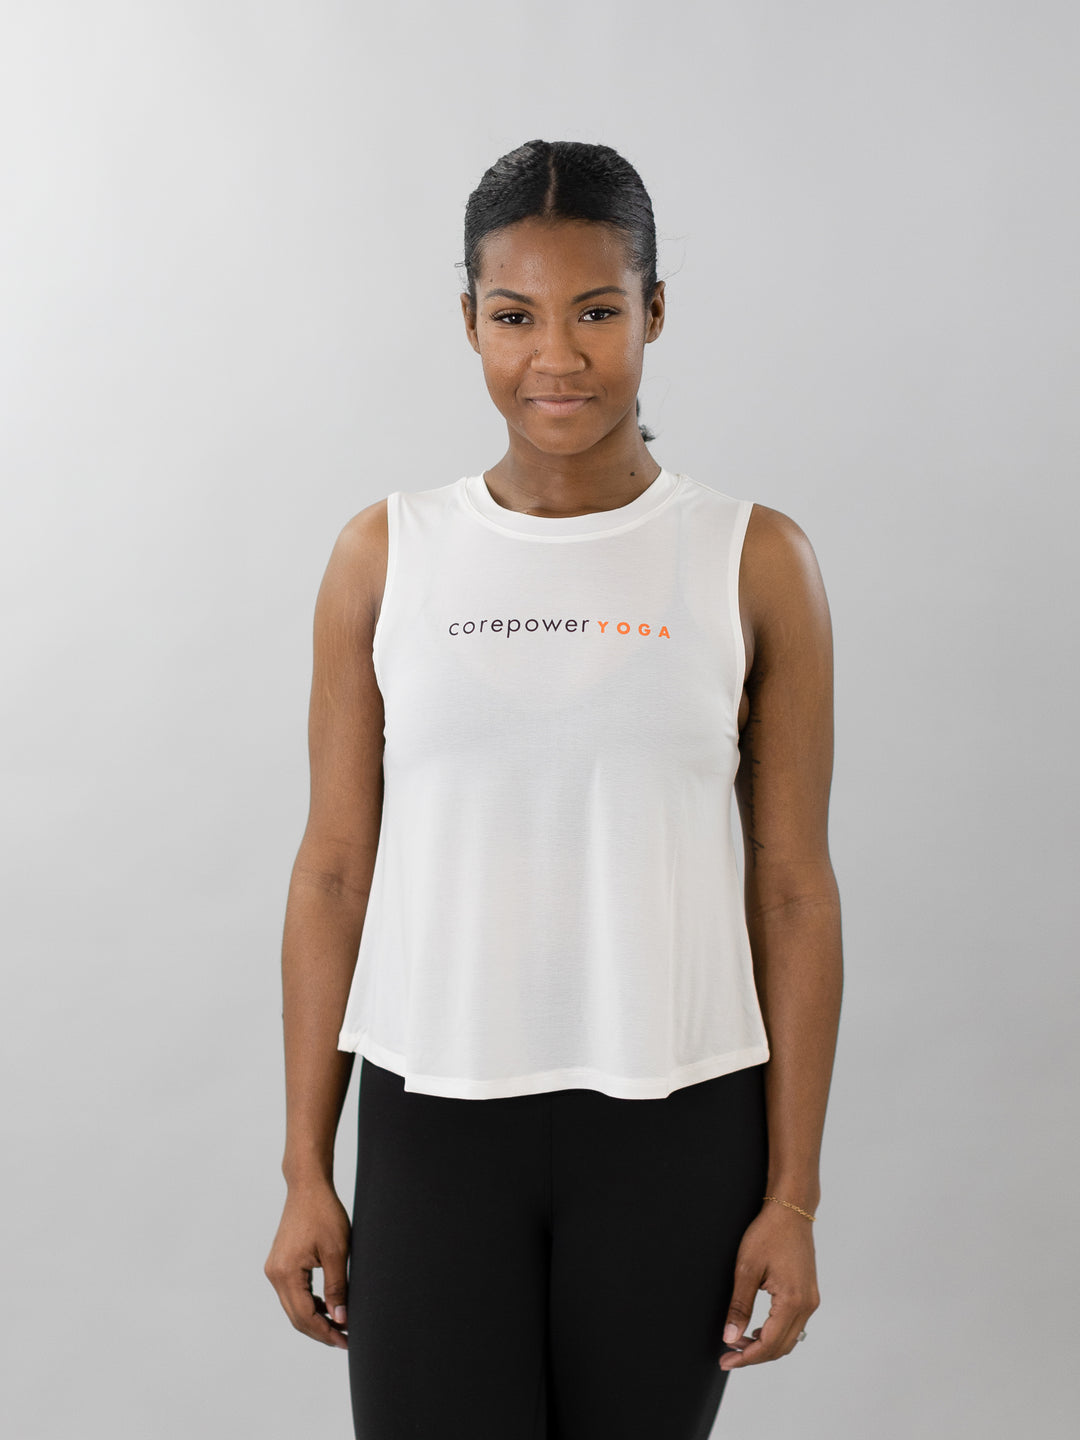 Yoga Crop Top Yoga Tank Top Women's Yoga Shirt Yoga Teacher Yoga